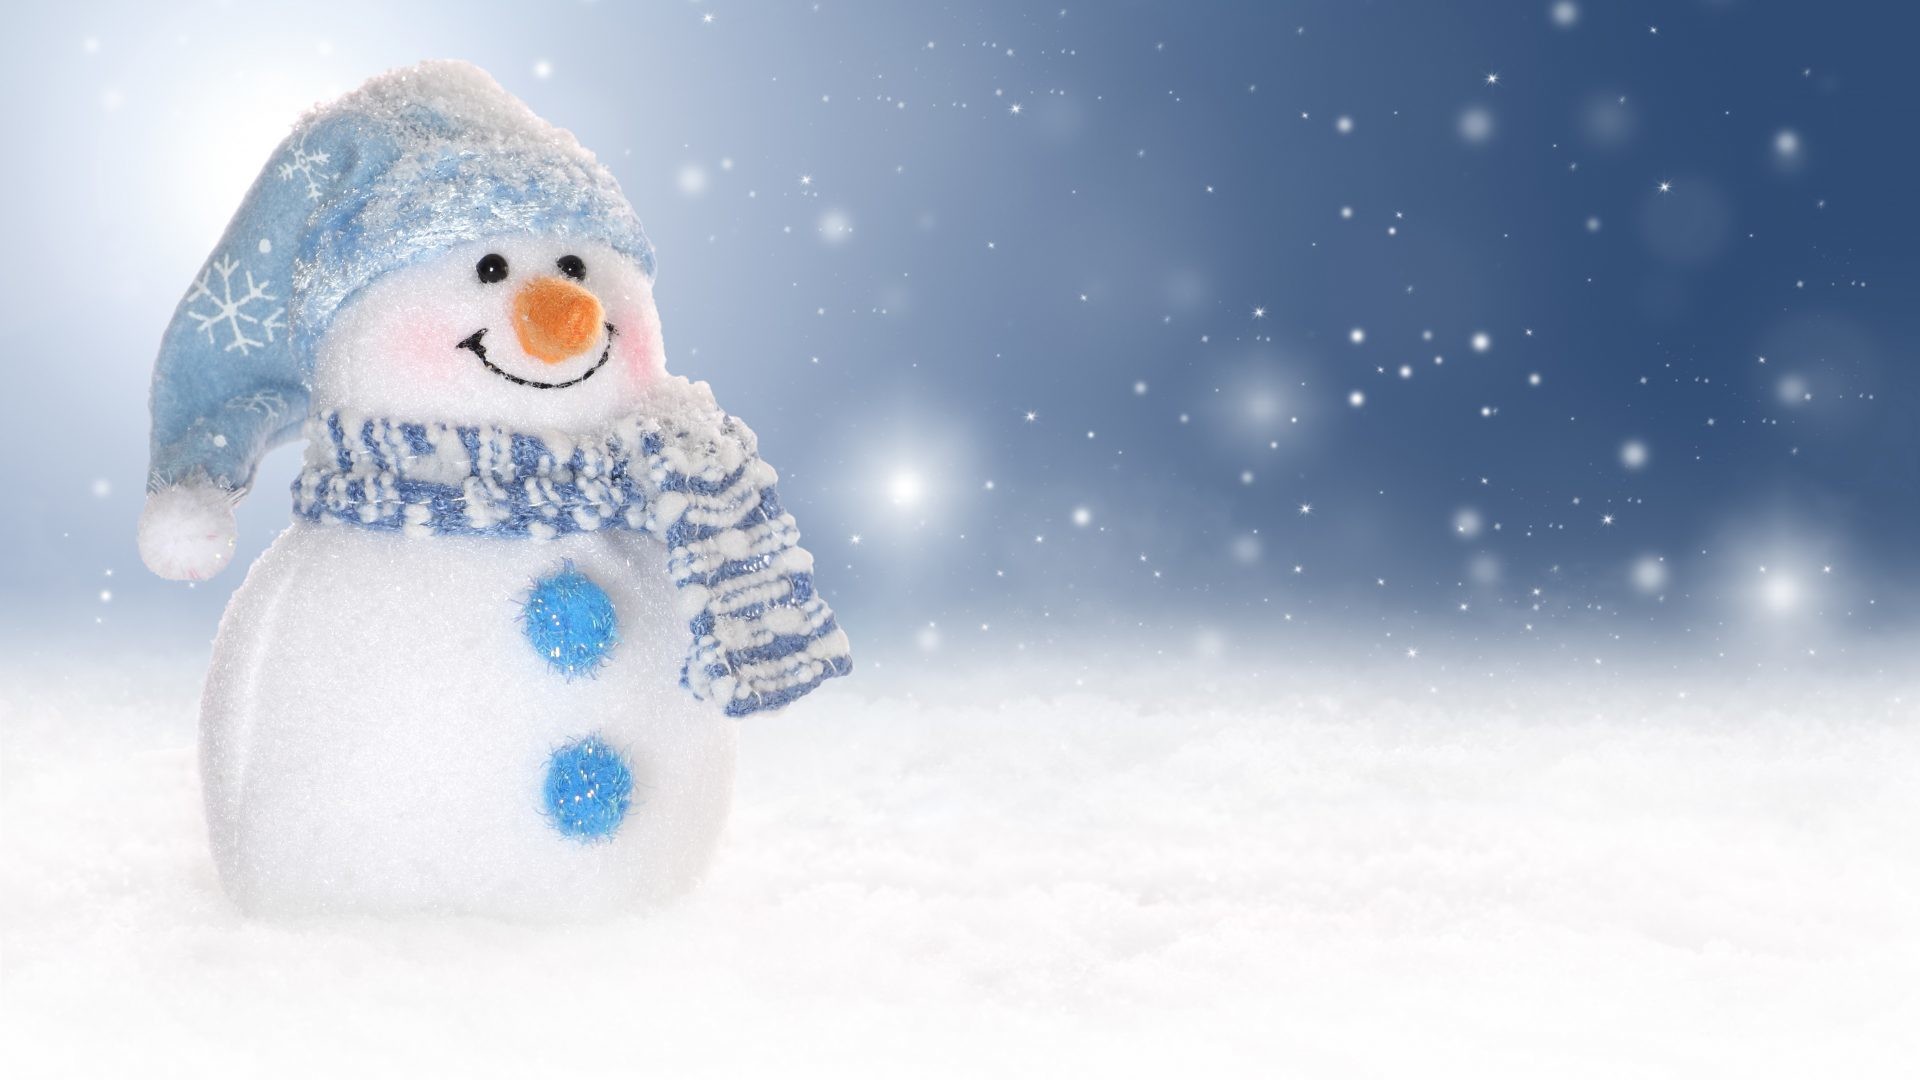 1920x1080 Winter - Snowman Snow Winter Xmas Cute Christmas Characters Desktop  Wallpaper Scenes for HD 16: